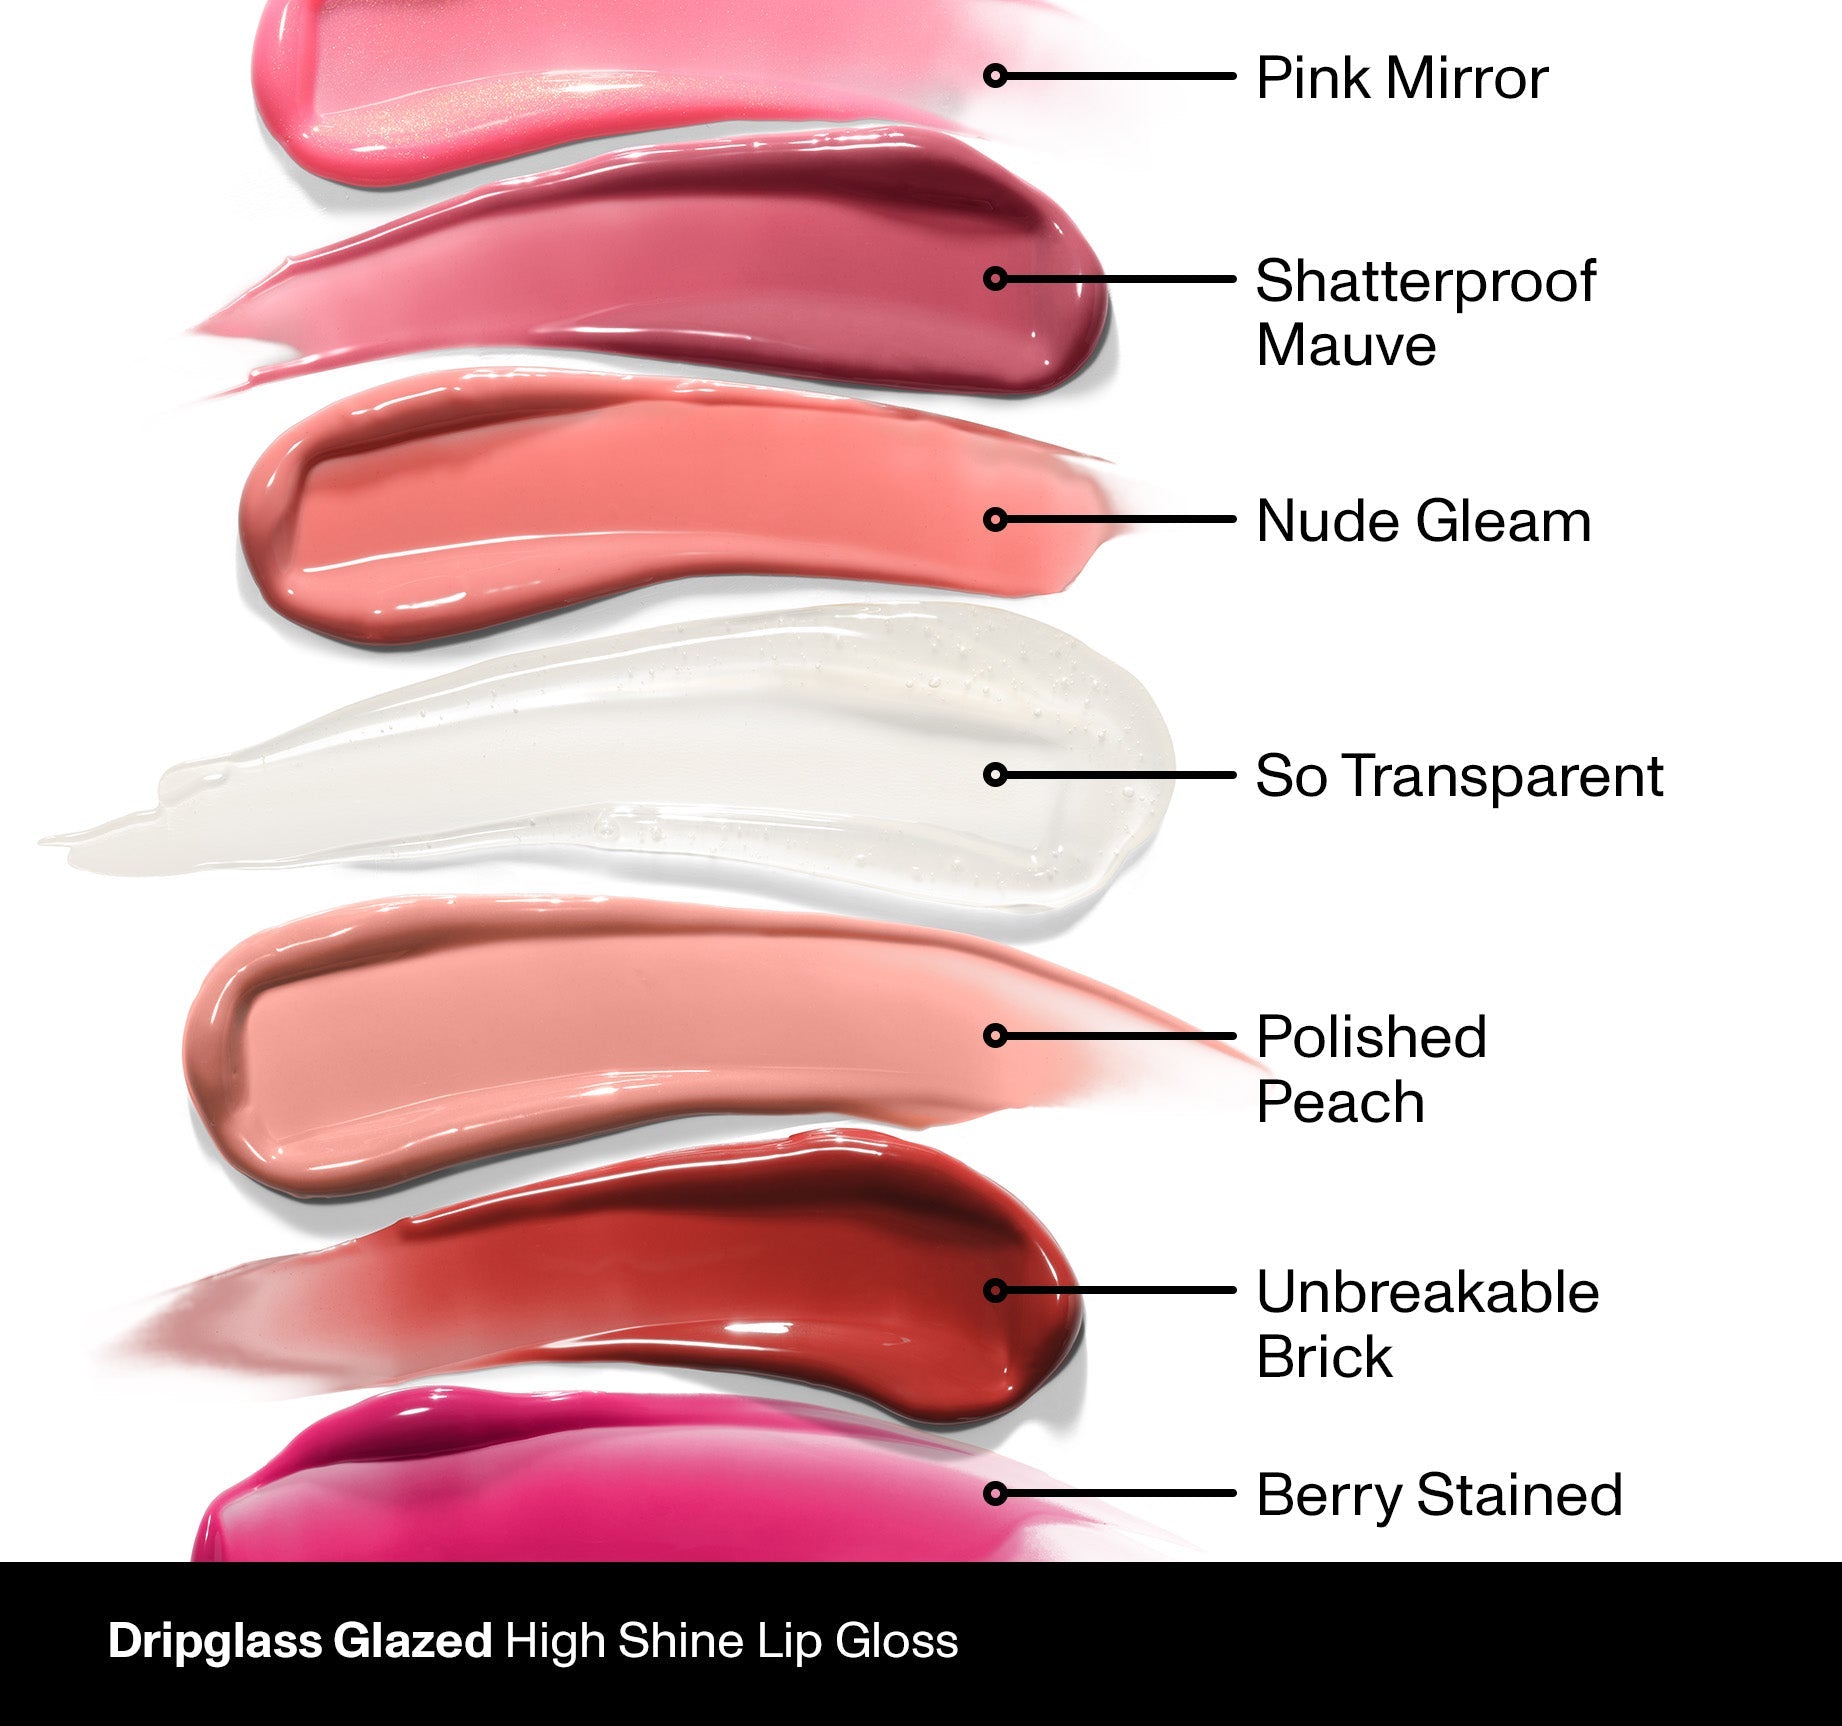 Dripglass Glazed High Shine Lip Gloss - Nude Gleam - Image 4